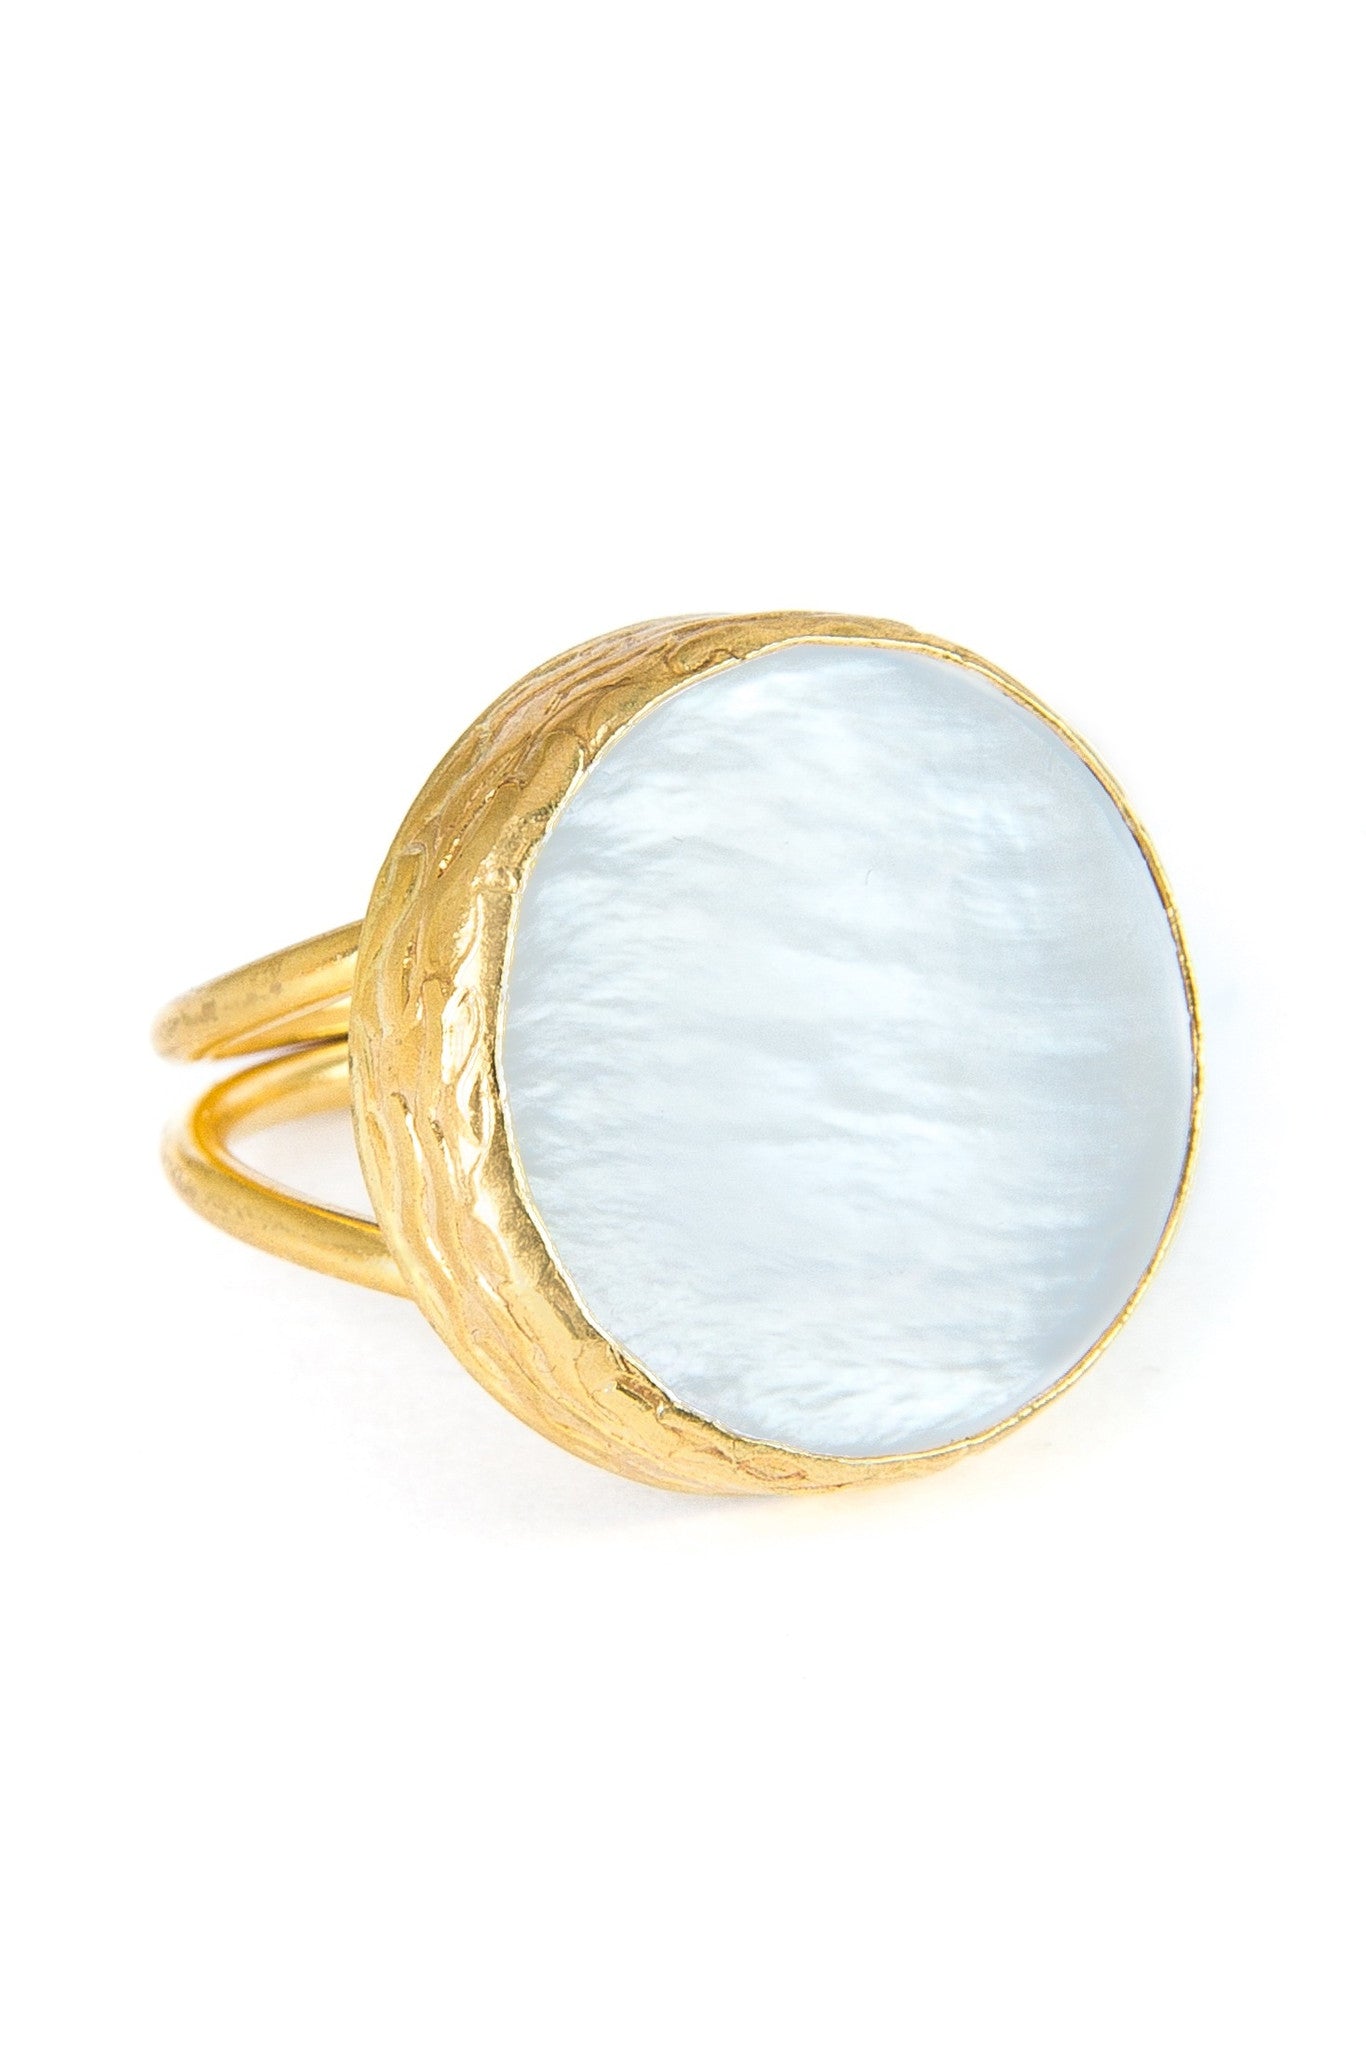 Mother of Pearl Gemstone Gold Ring - Lulugem.com